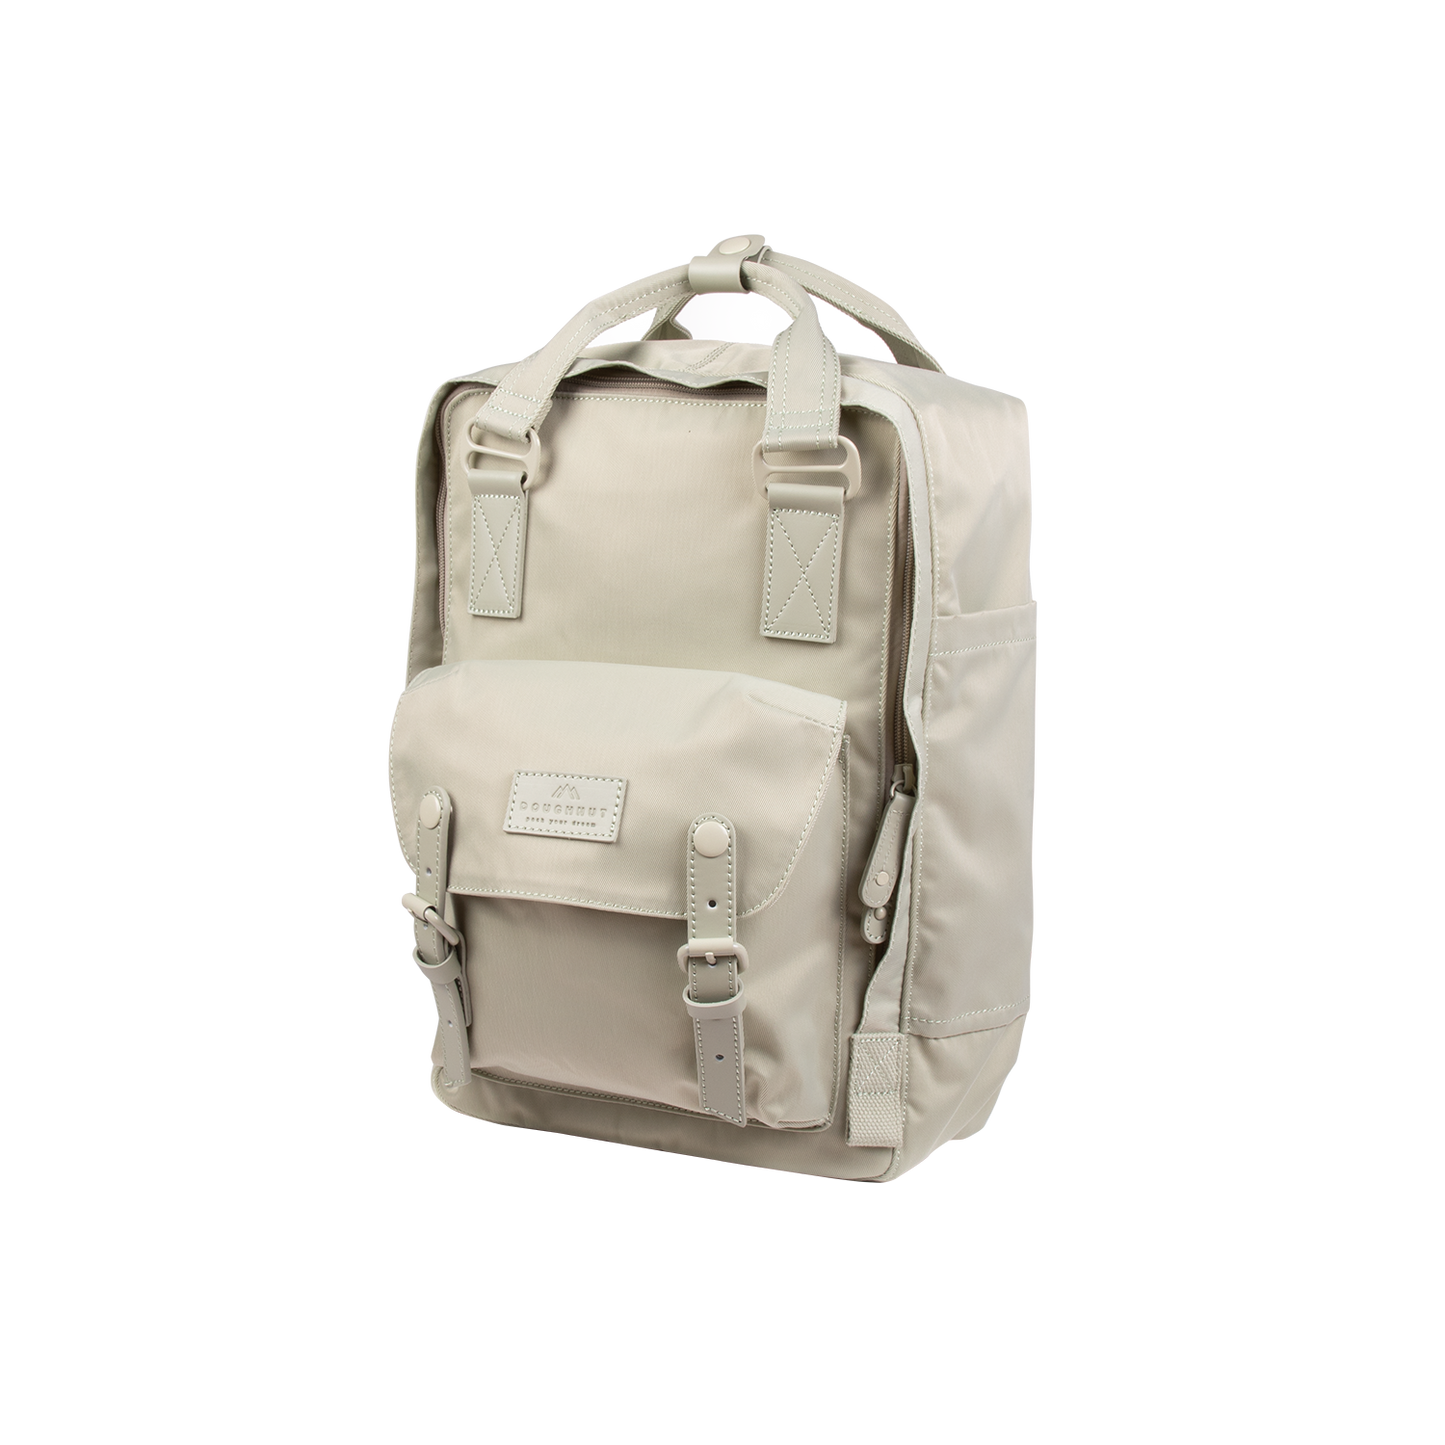 Macaroon Nature Pale Series Backpack